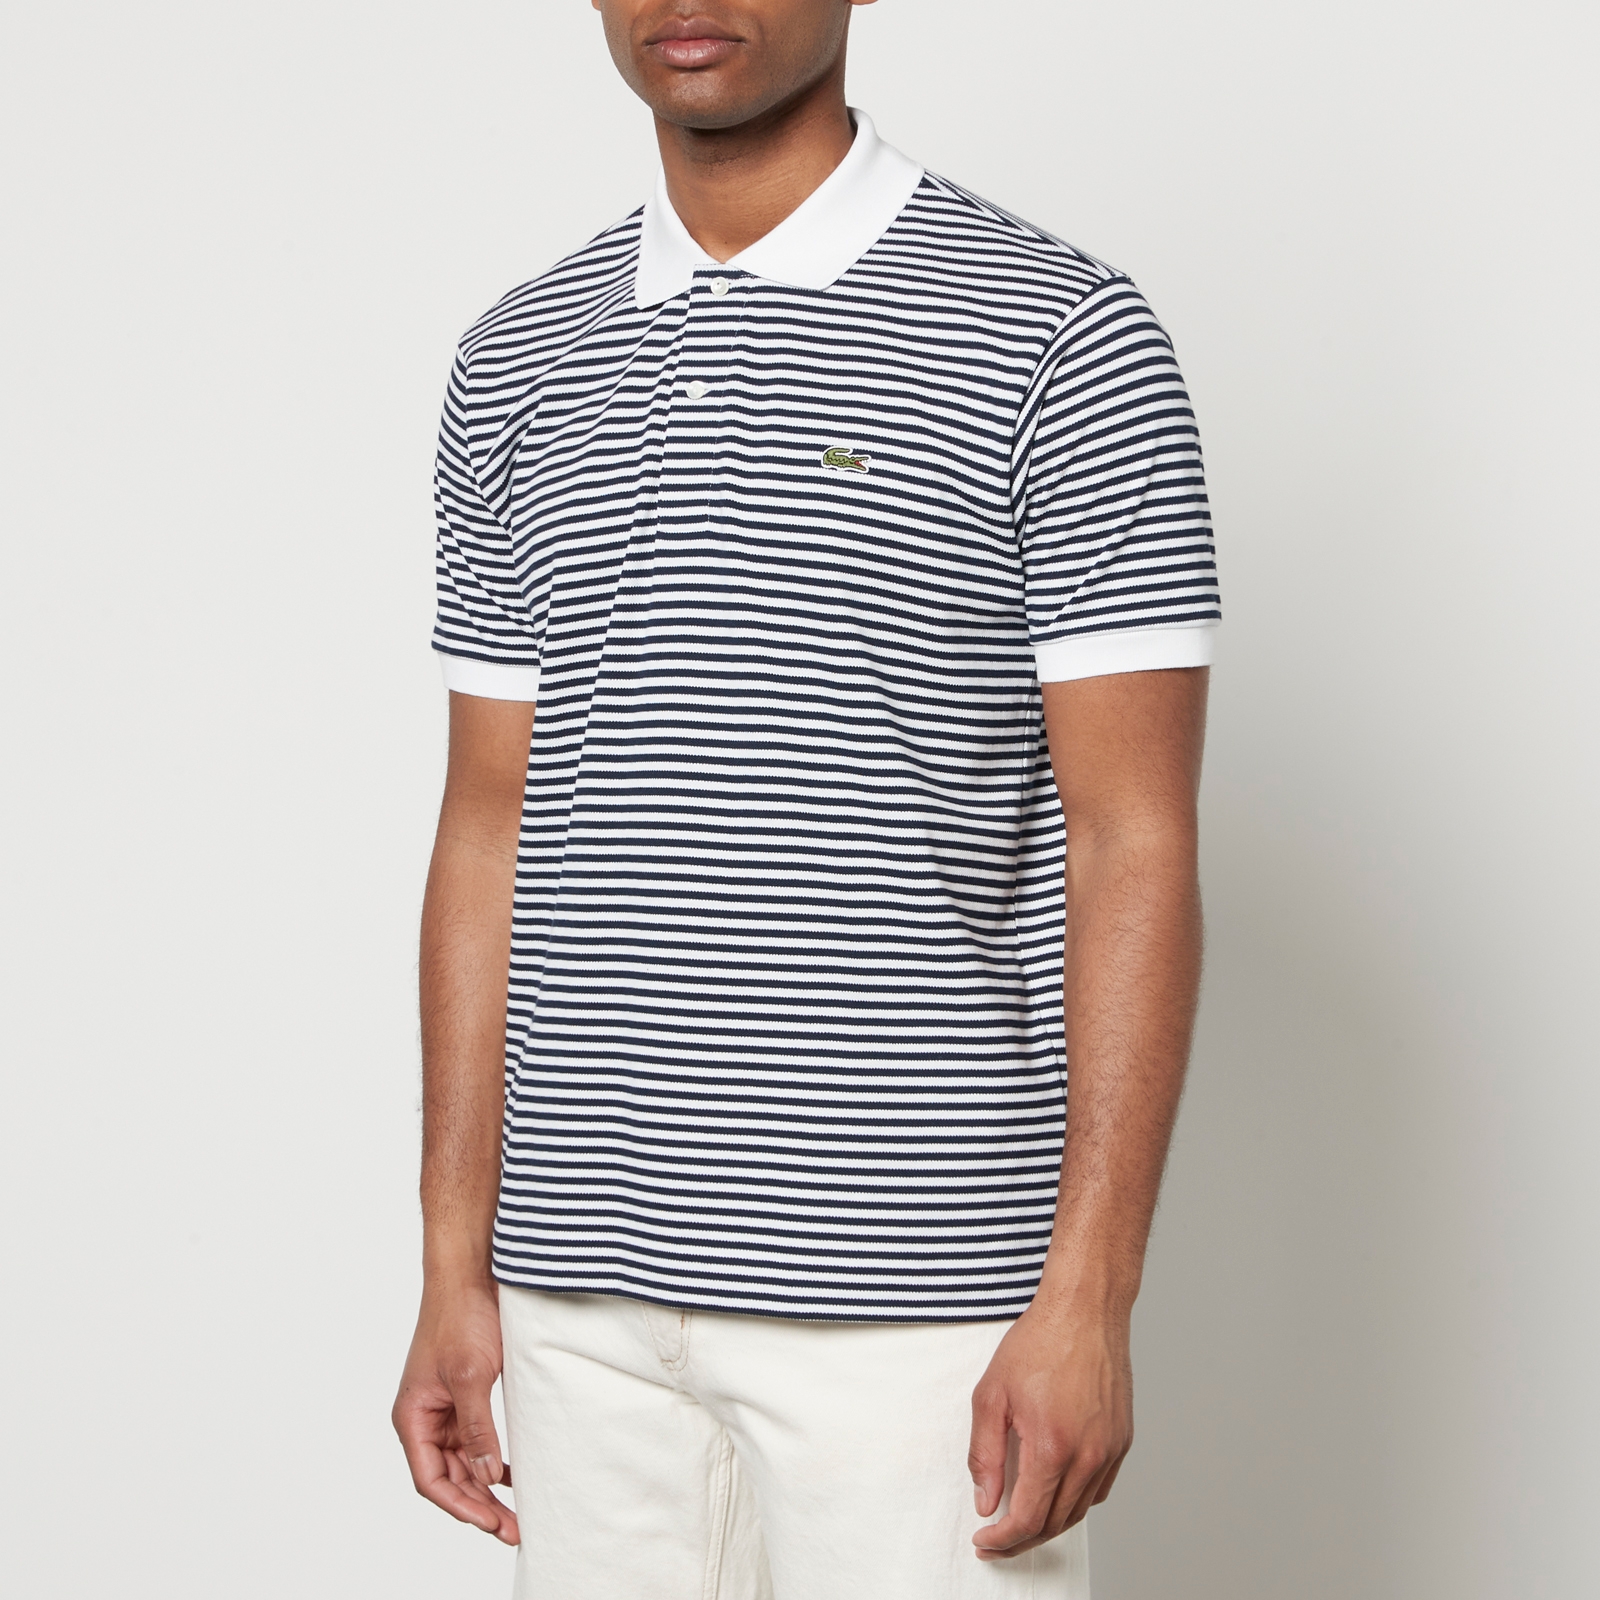 Lacoste Jacquard Stripe Cotton-Pique Polo Shirt